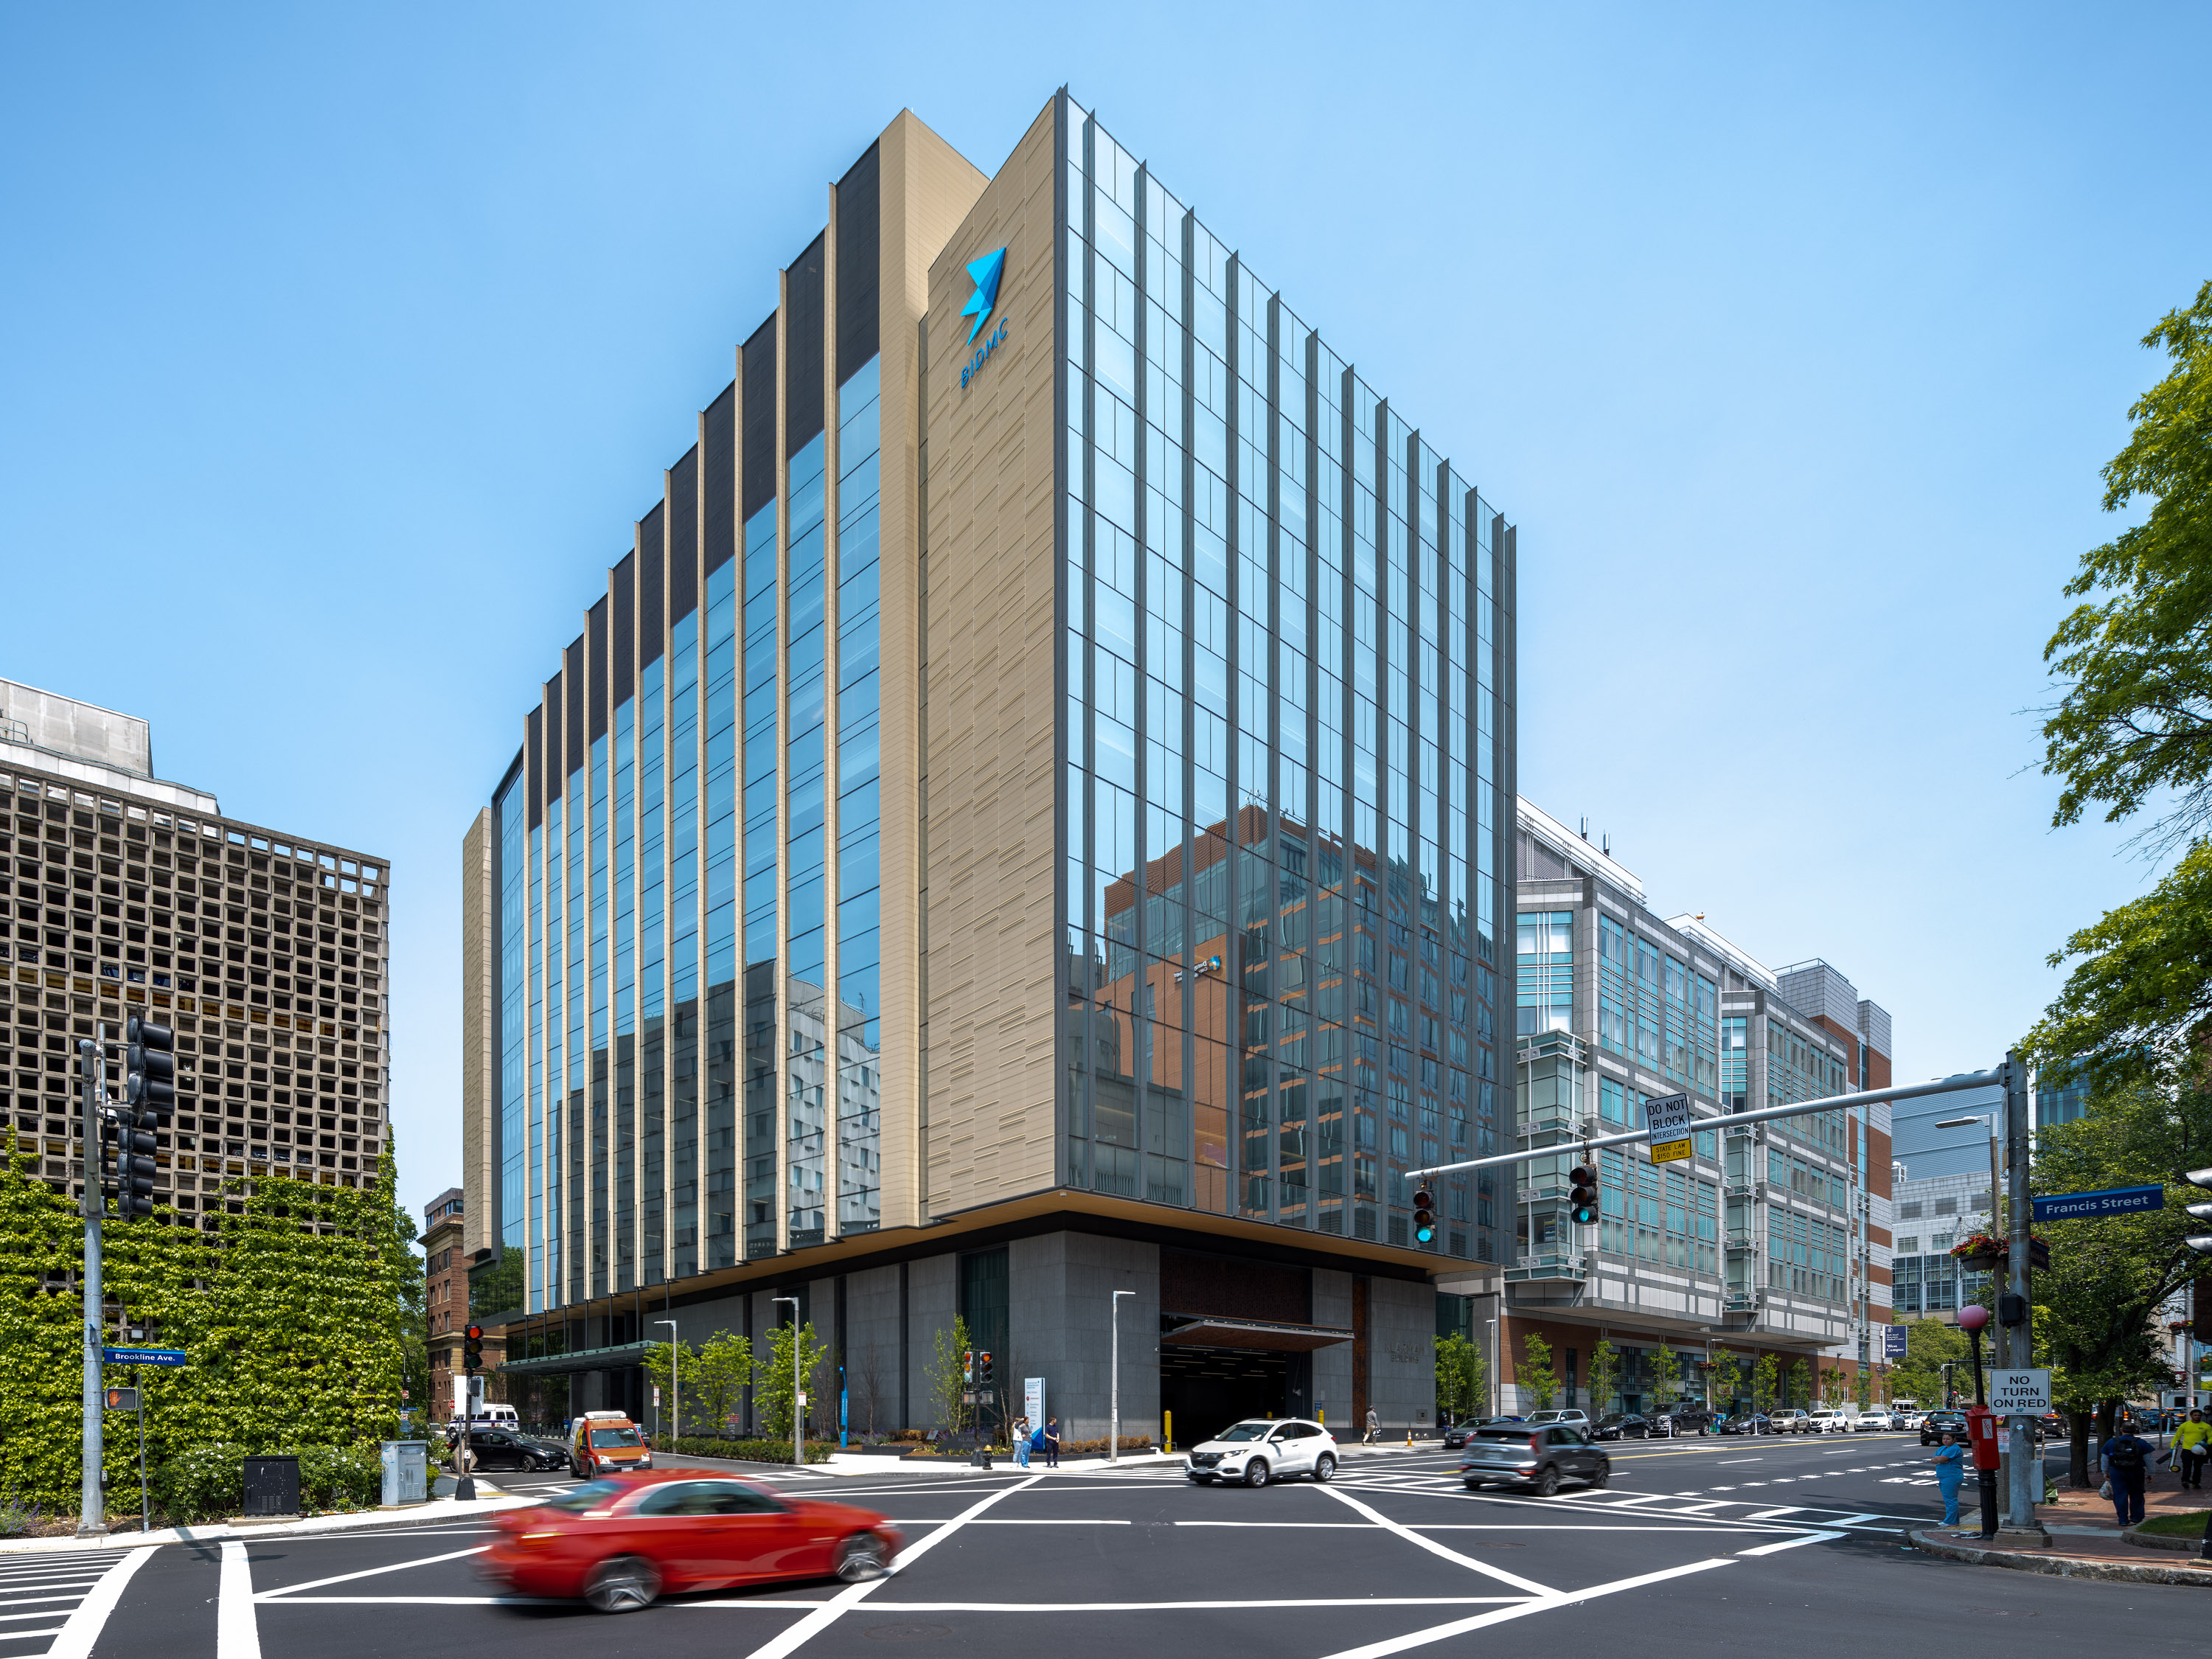 “Klarman”: Beth Israel Deaconess Medical Center - Klarman Building - 111 Francis St, Boston, MA